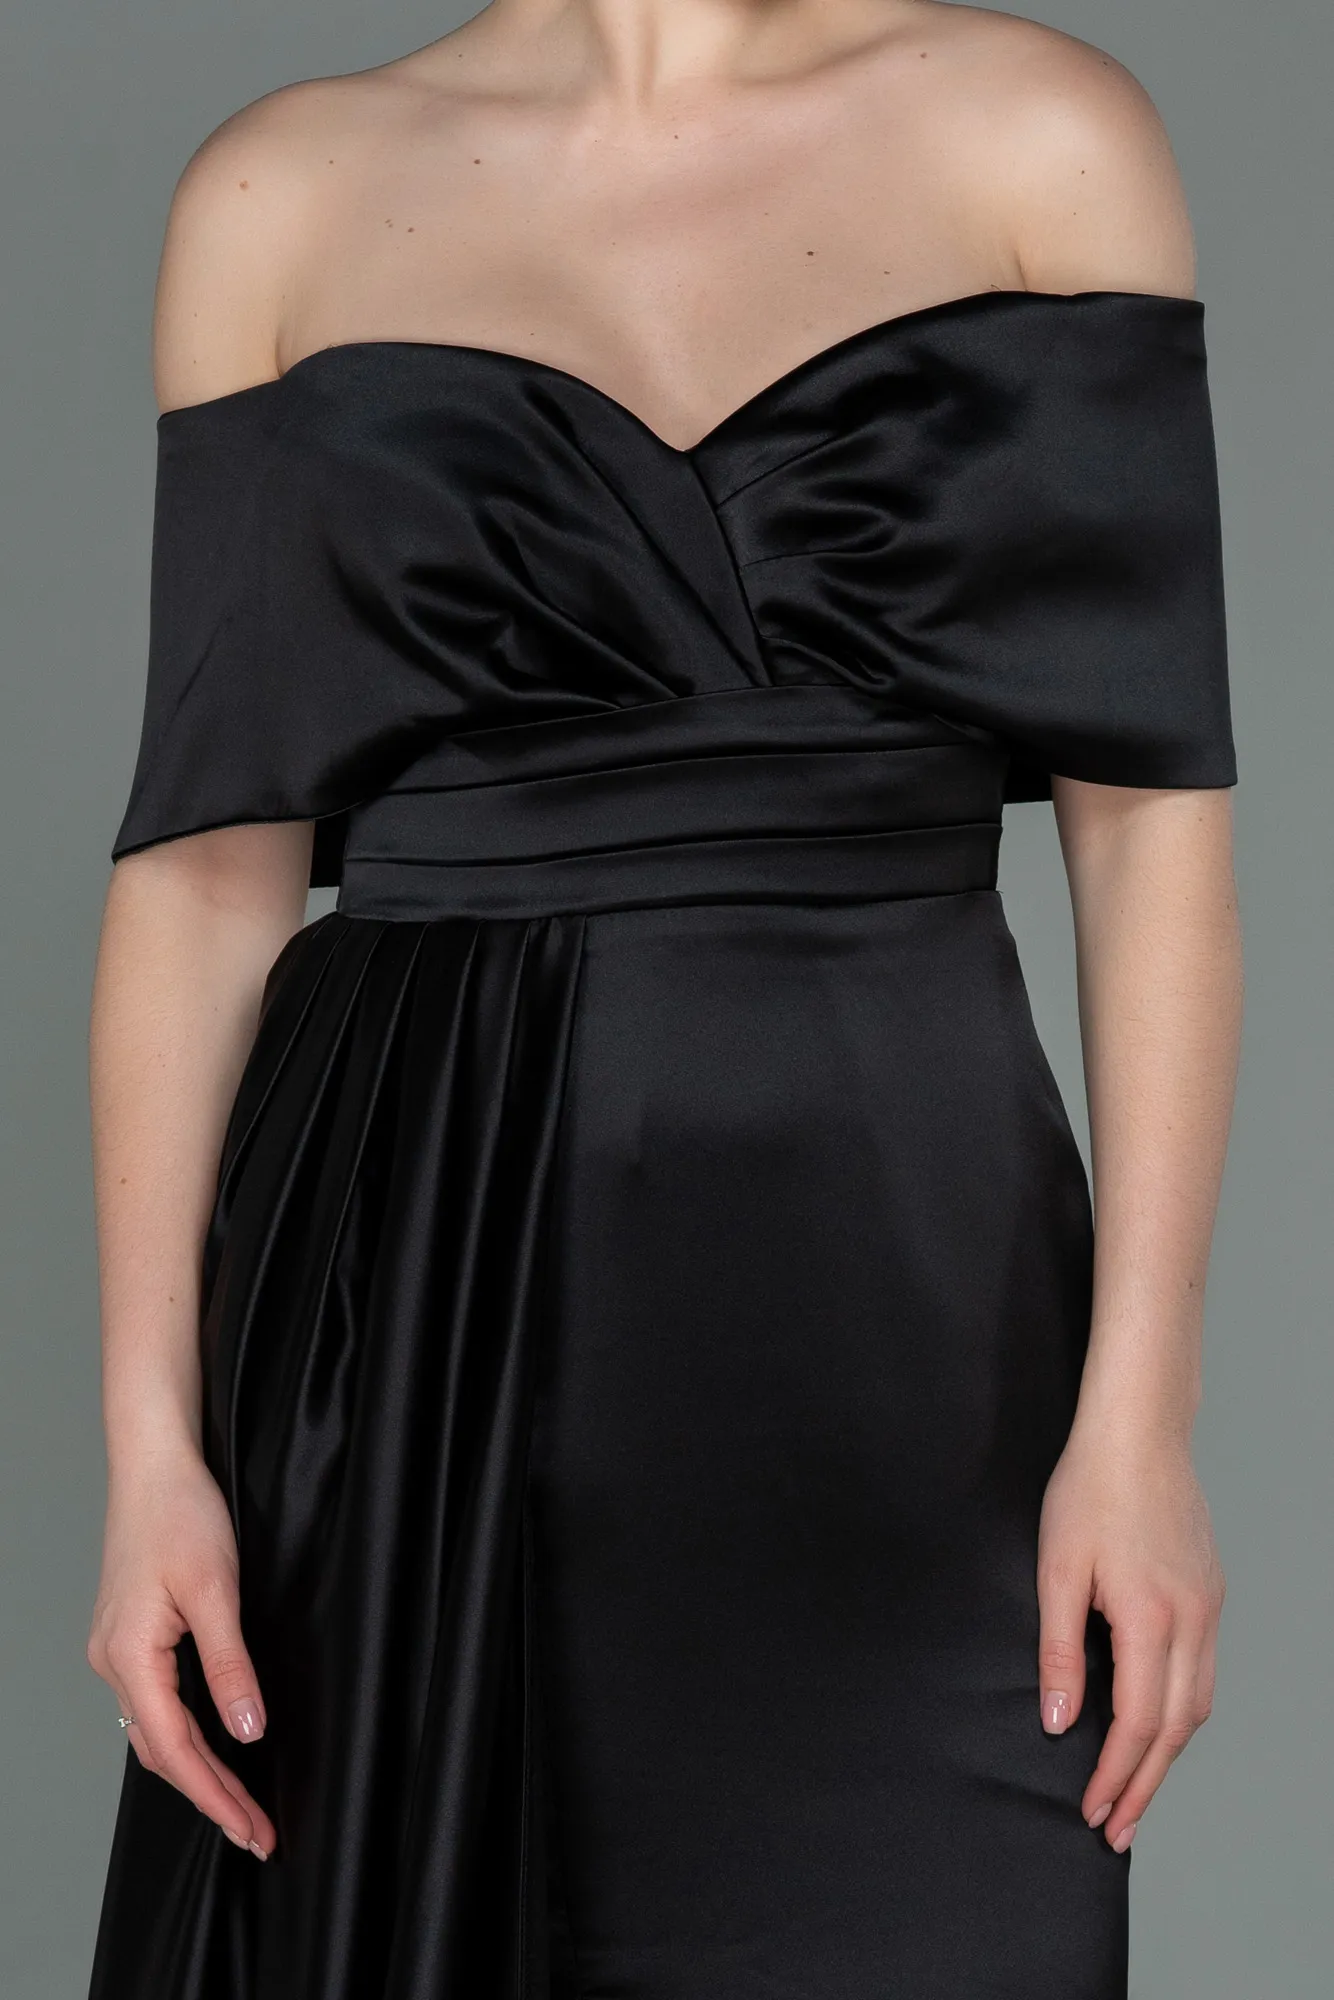 Black-Long Satin Evening Dress ABU2893